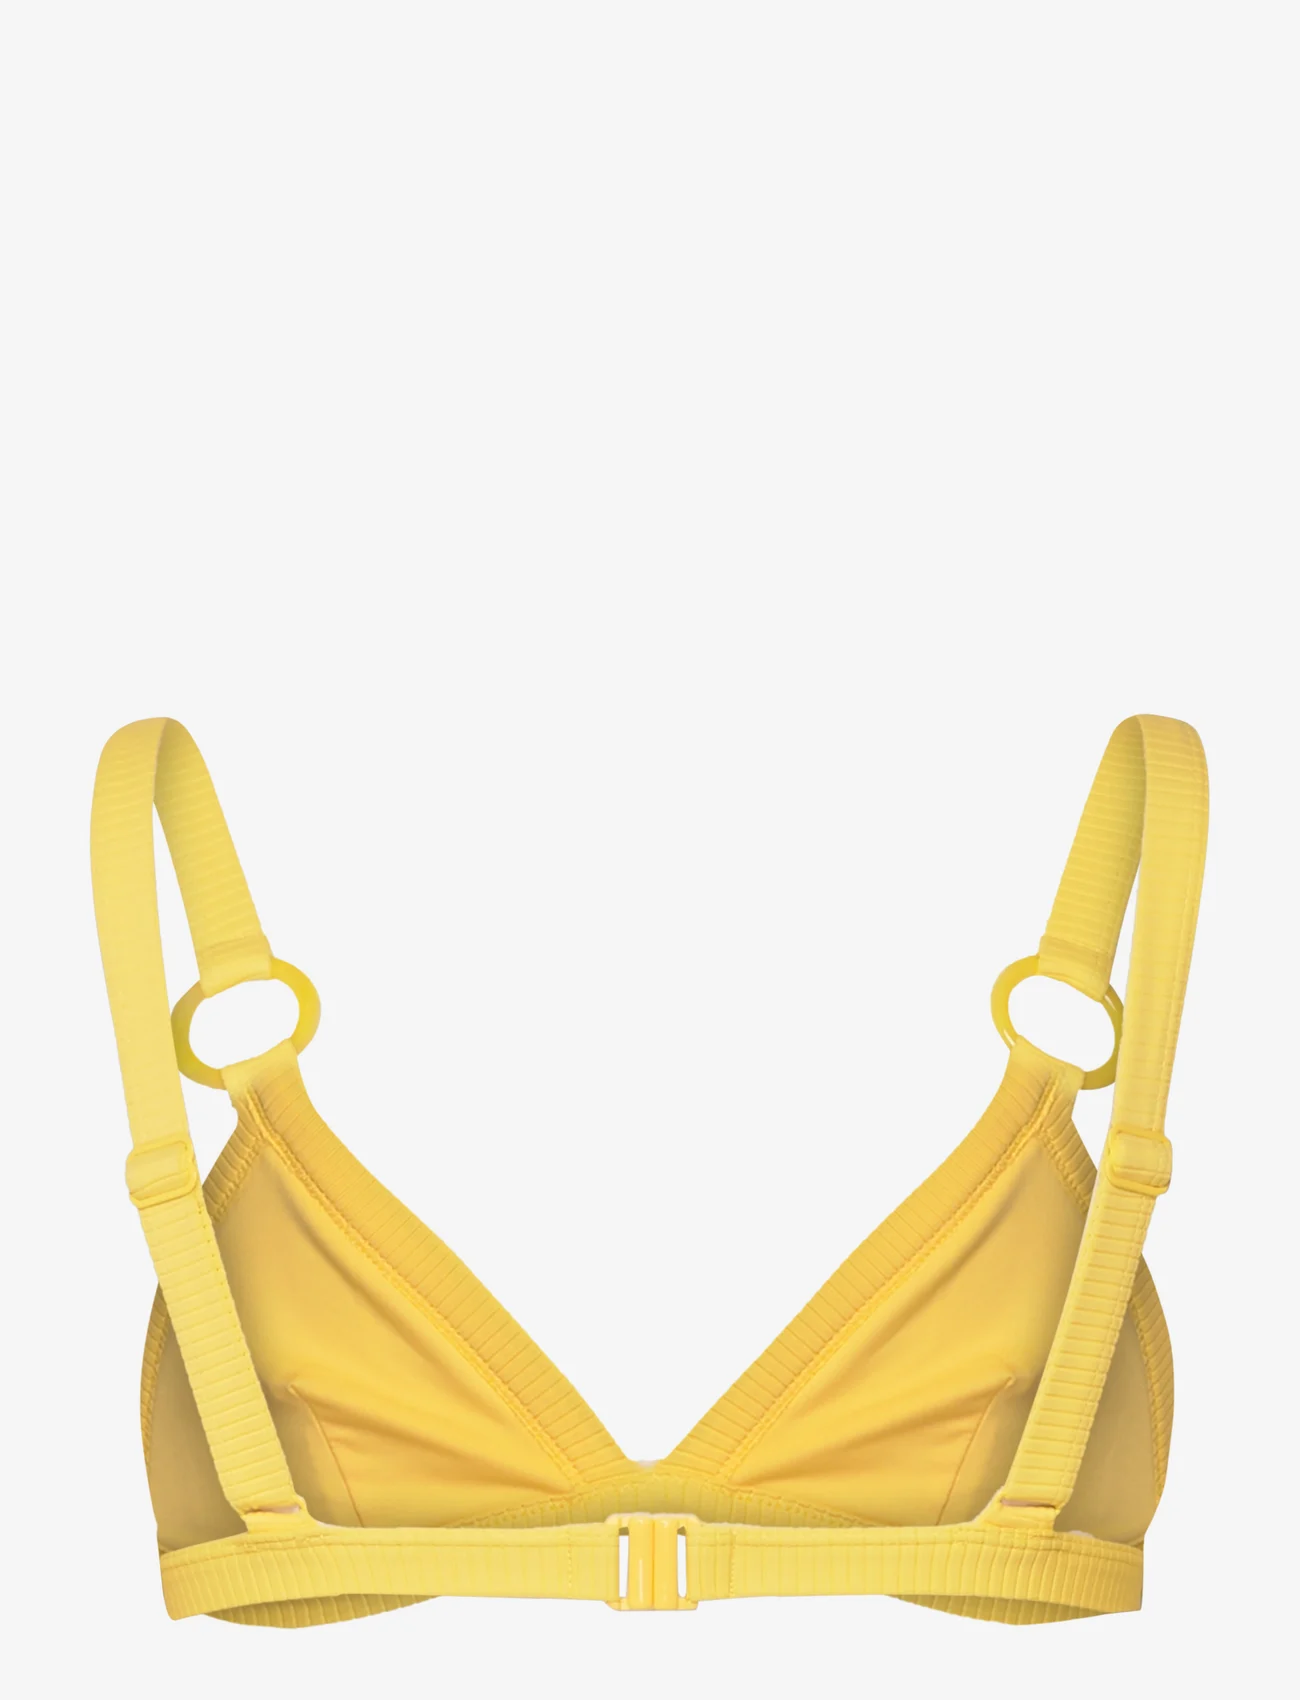 Hunkemöller - Lana rib triangle - triangle bikinis - limelight - 1